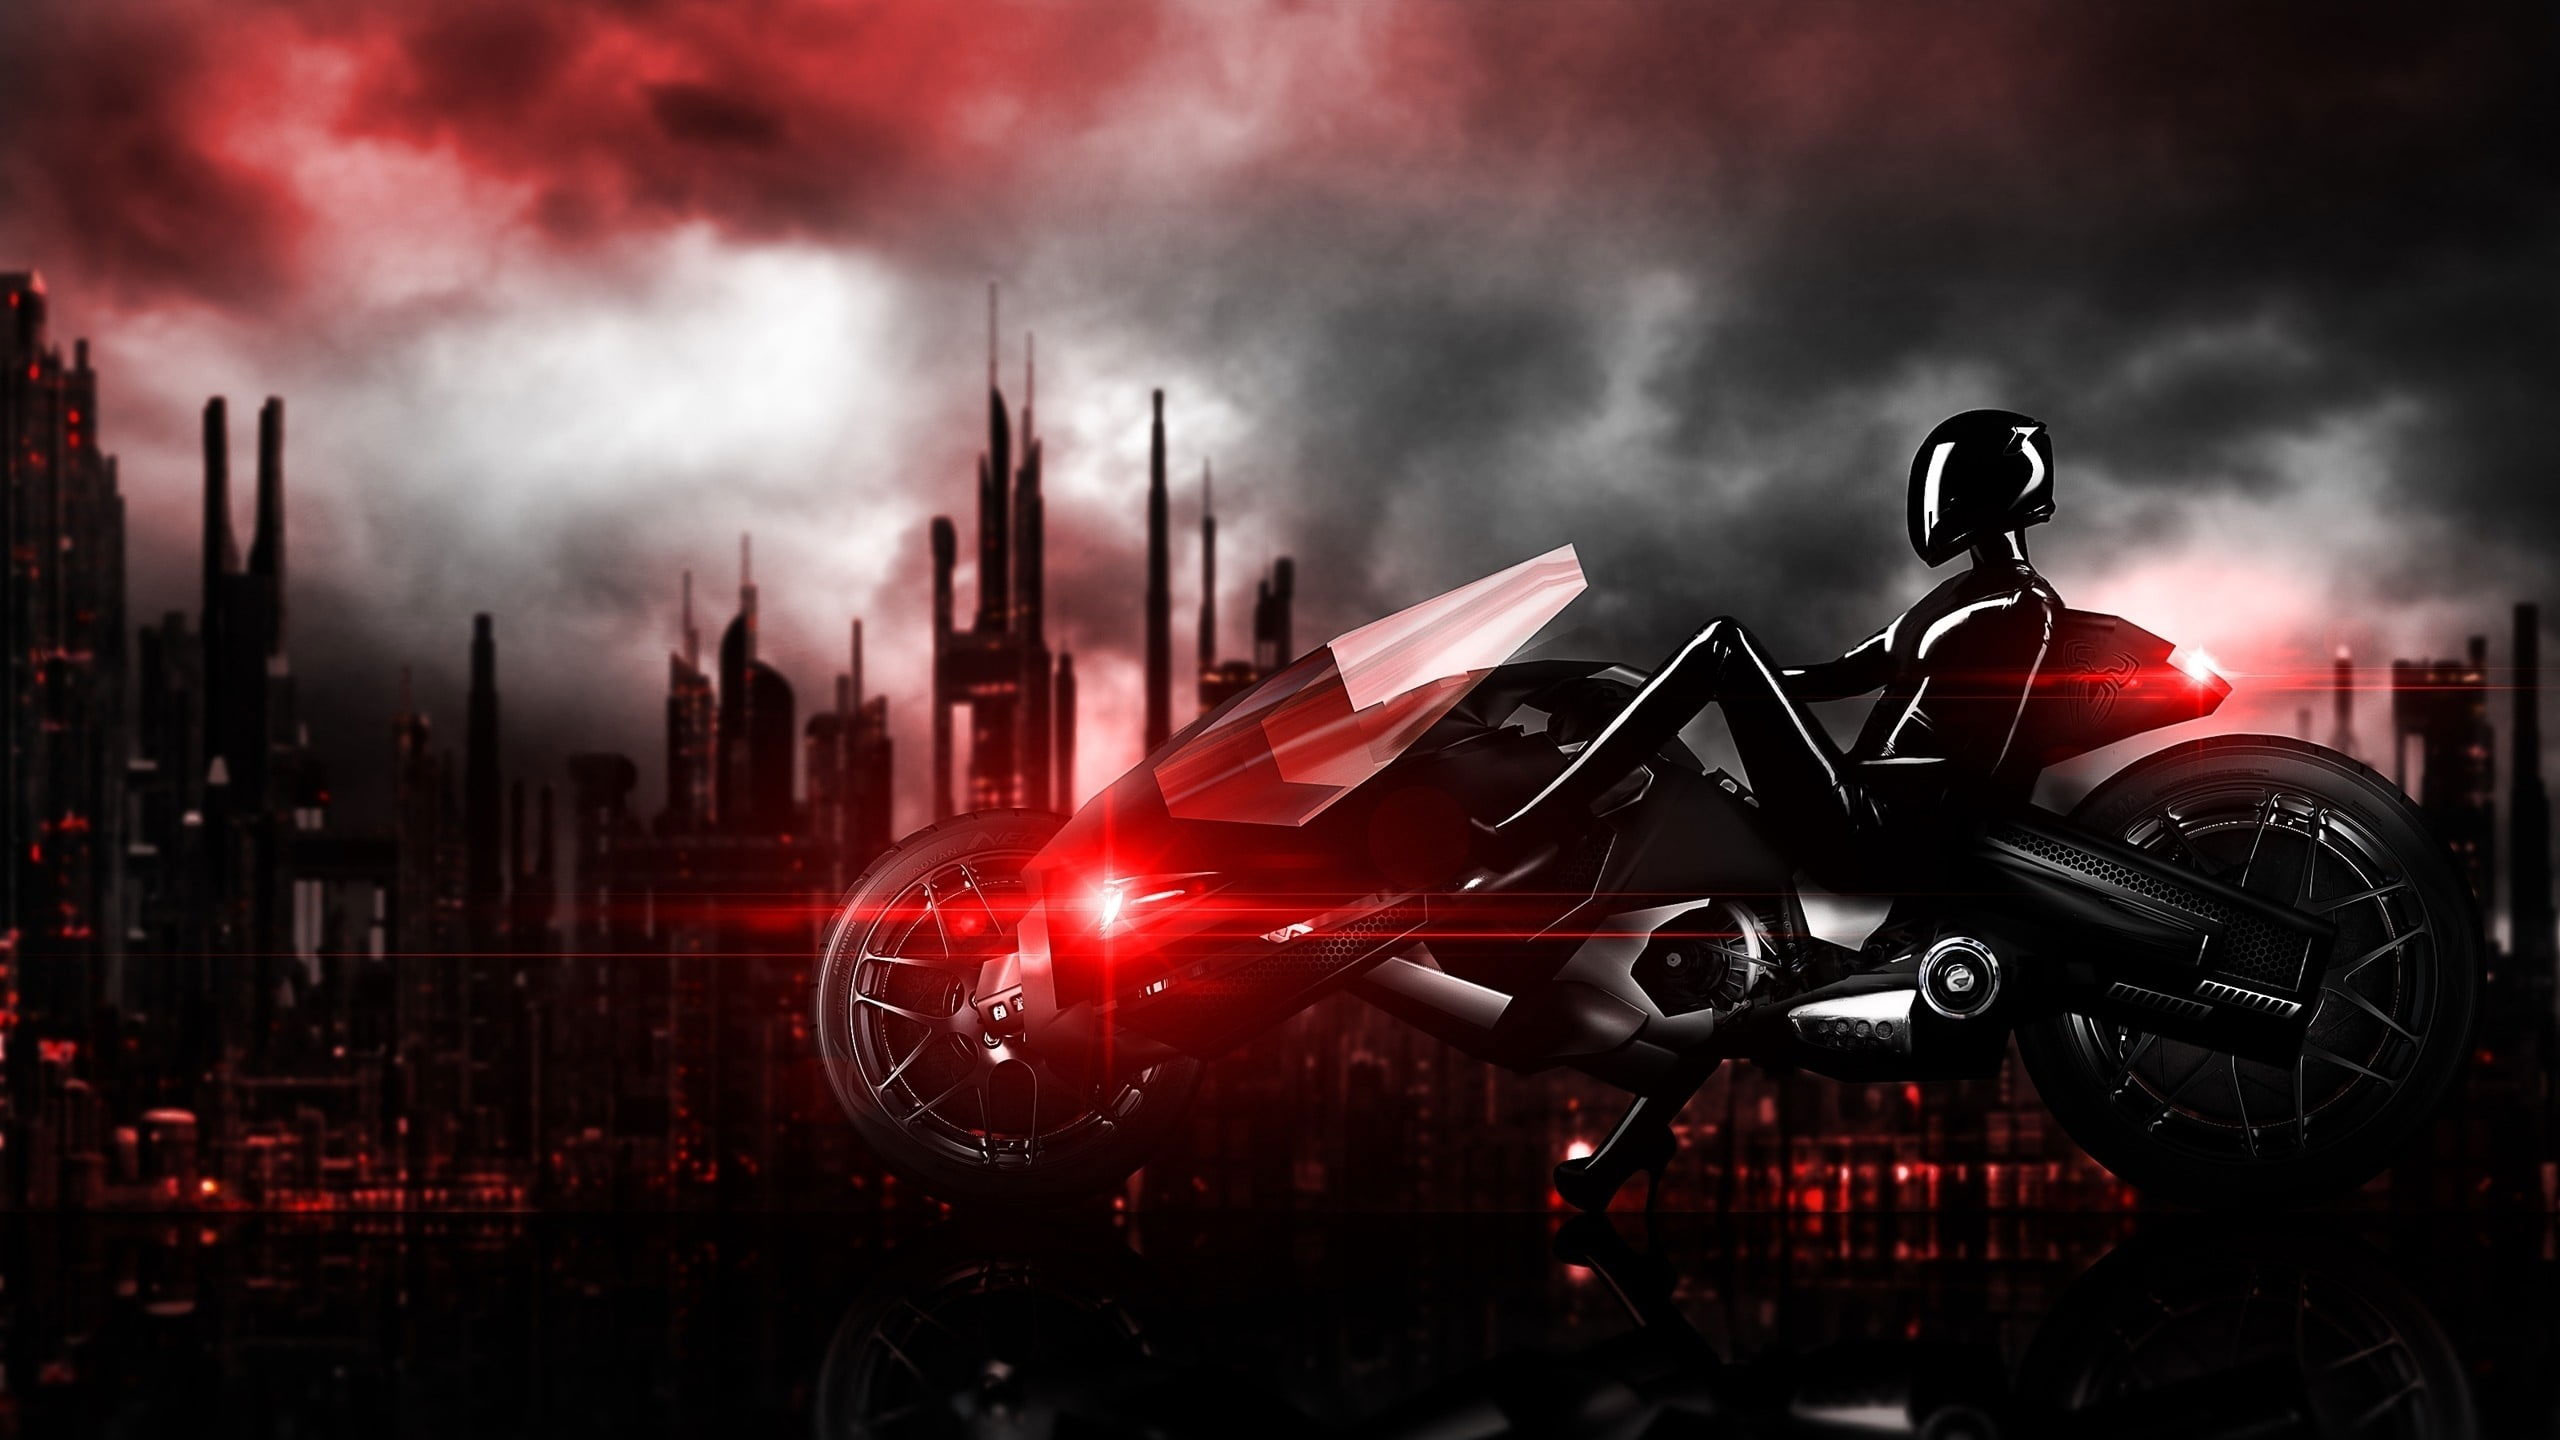 Black sports bike illustration wallpaper, futuristic, cyberpunk, motorcycle